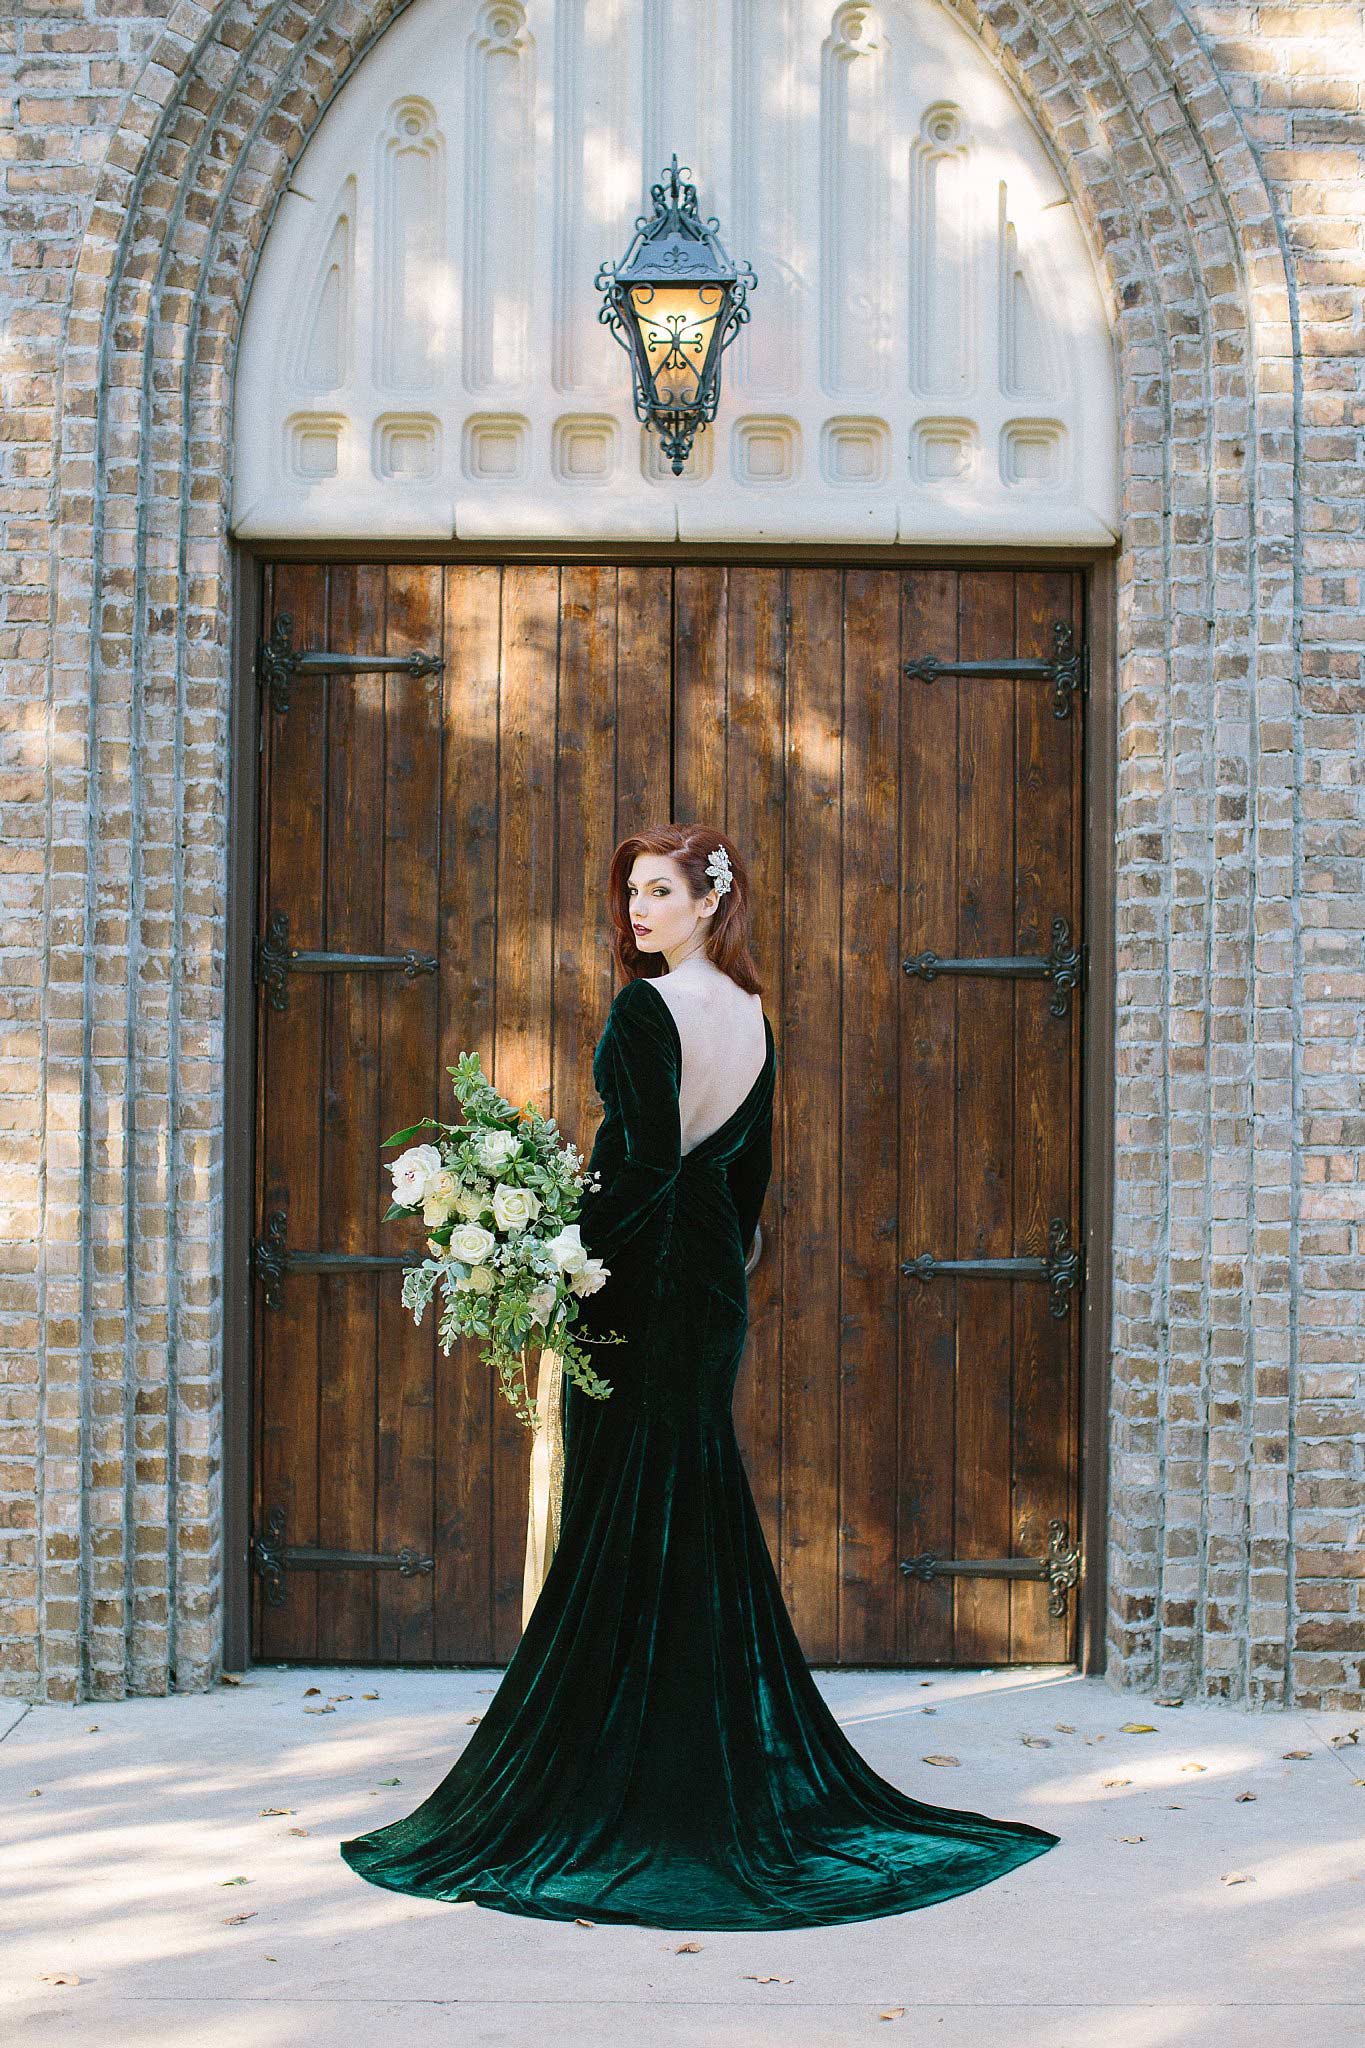 aristide mansfield wooden door entry with bridesmaid in green velvet dress